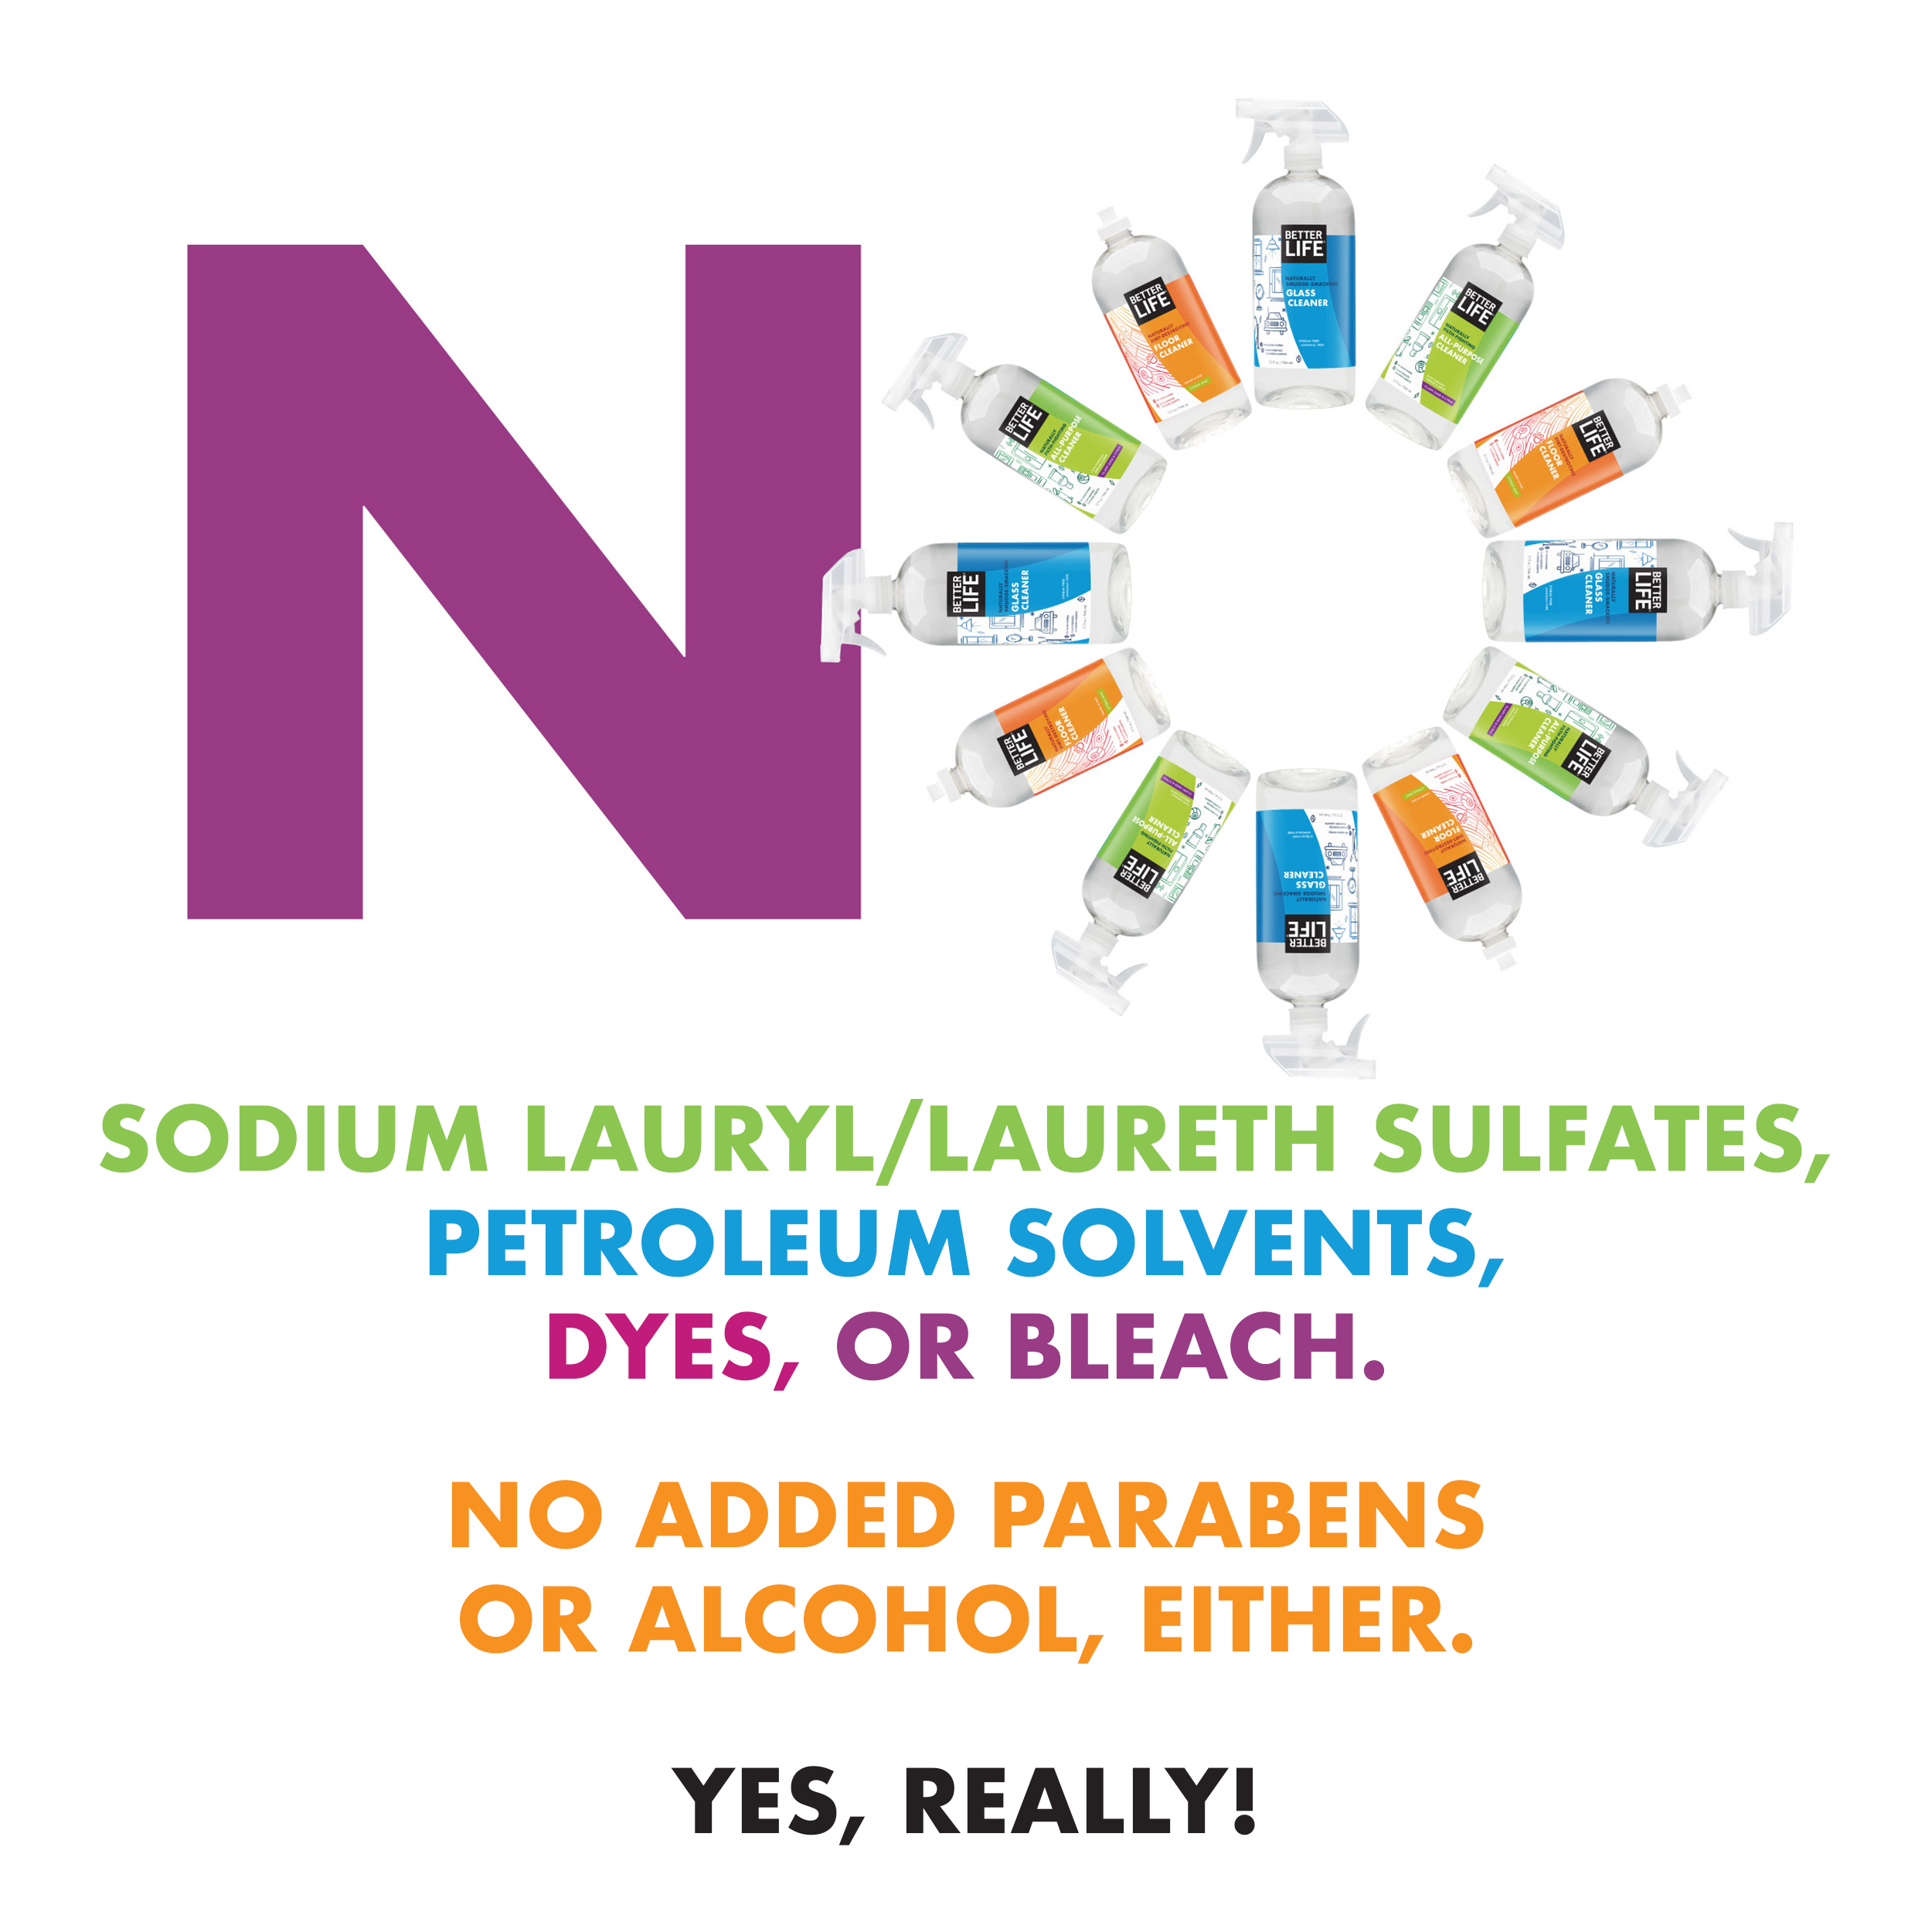 No sodium lauryl sulfate, petroleum solvents, detergents, or bleach.